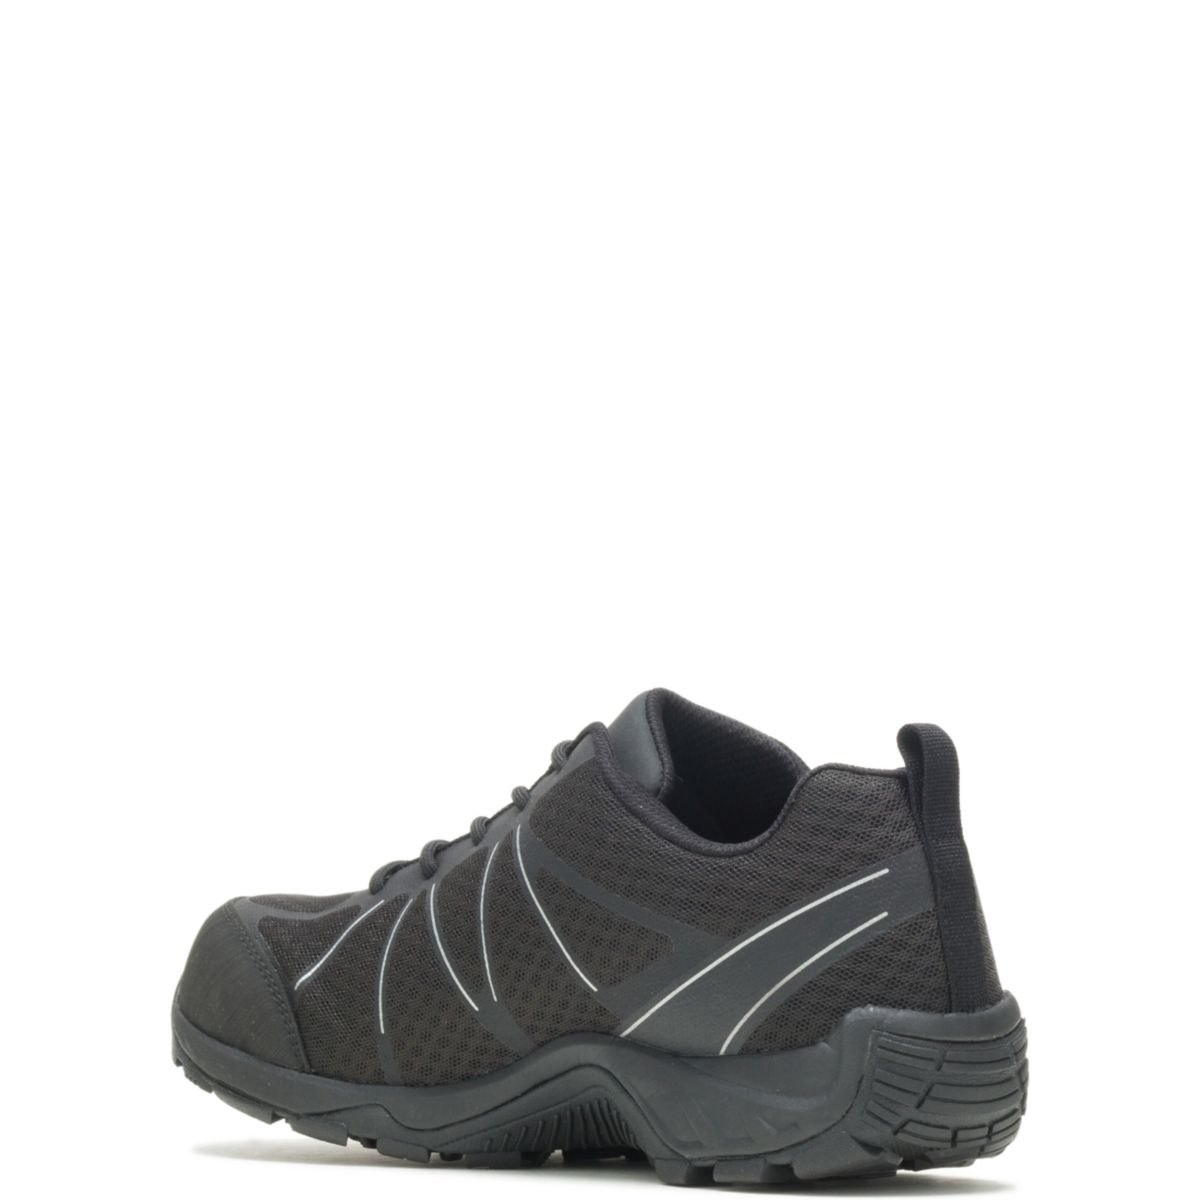 WOLVERINE Men's Amherst II CarbonMAXÂ® Composite Toe Work Shoe Black - W201147 BLACK - BLACK, 10.5 X-Wide